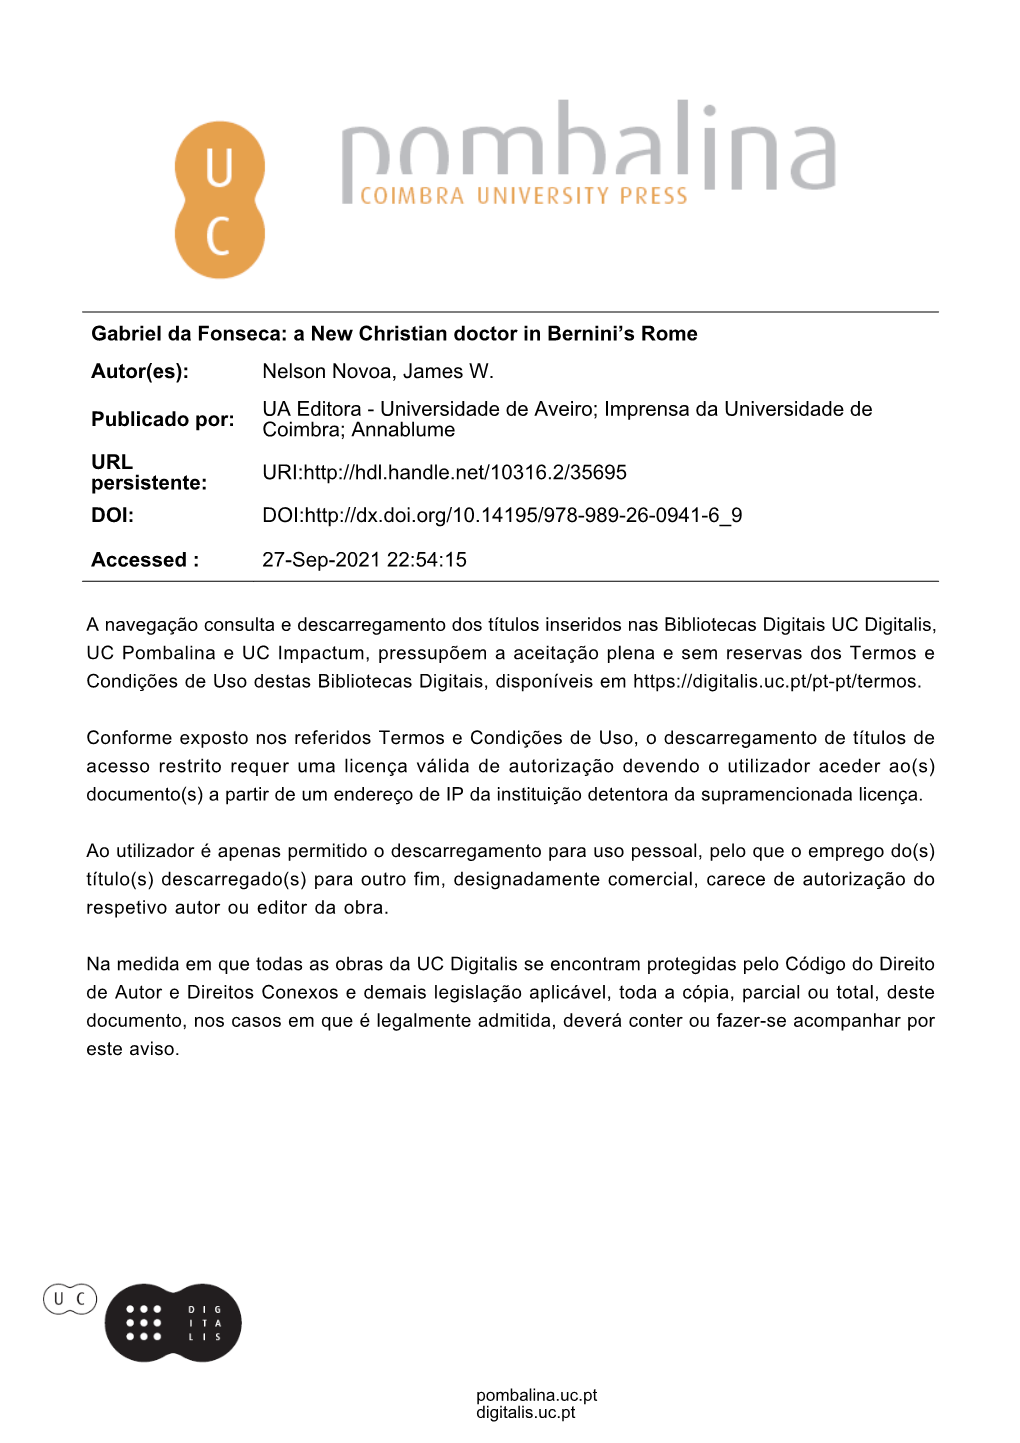 Gabriel Da Fonseca: a New Christian Doctor in Bernini’S Rome Autor(Es): Nelson Novoa, James W